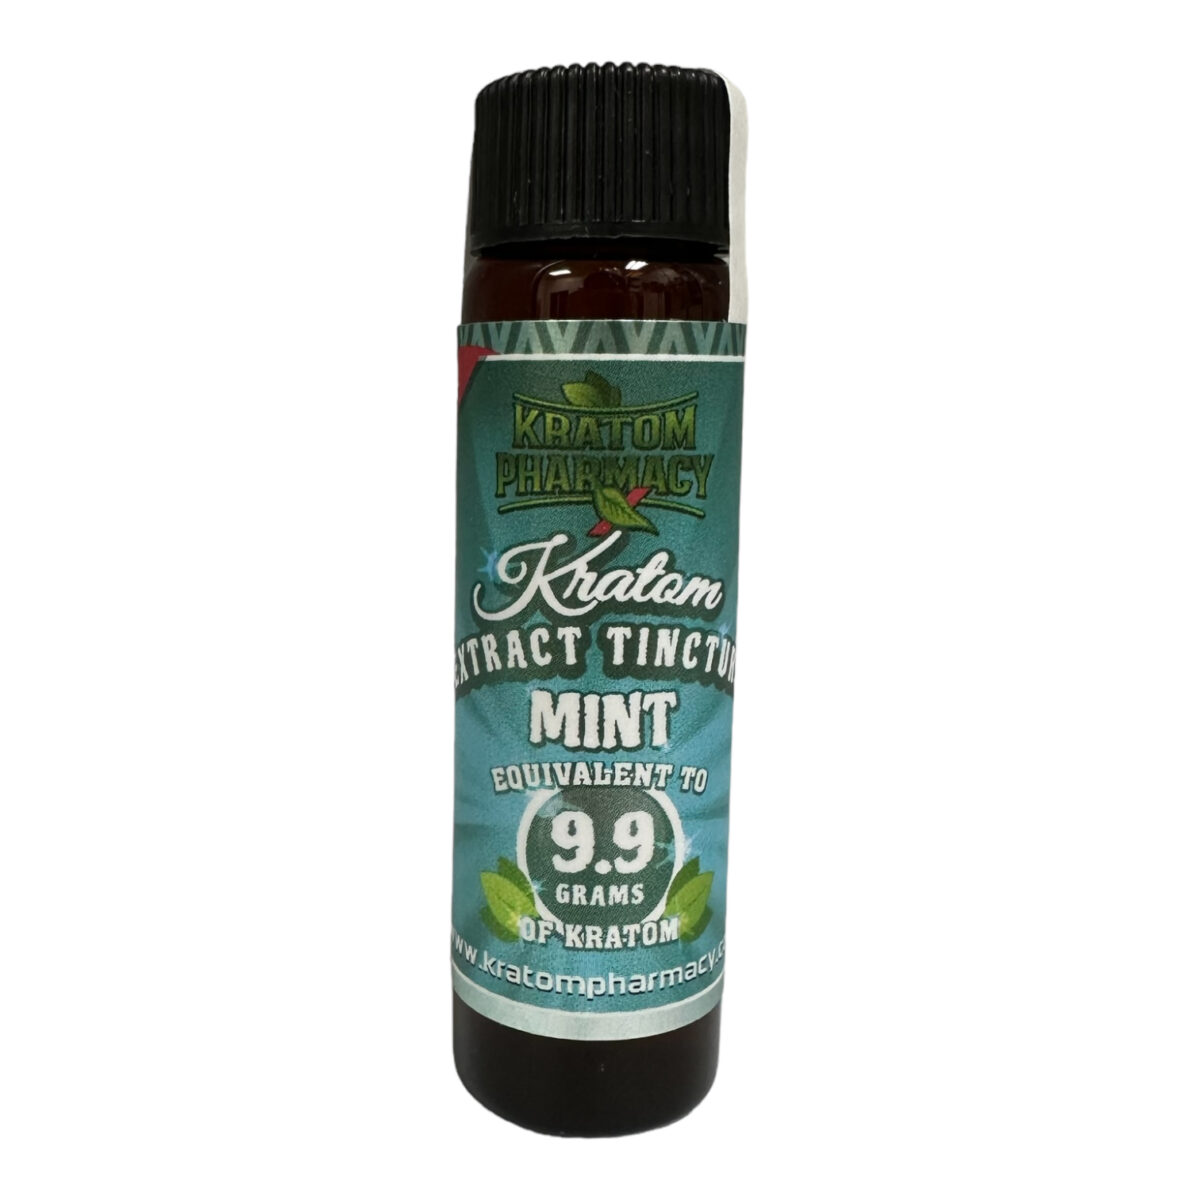 Kratom Pharmacy Mint Extract Tincture 9.9g Shot